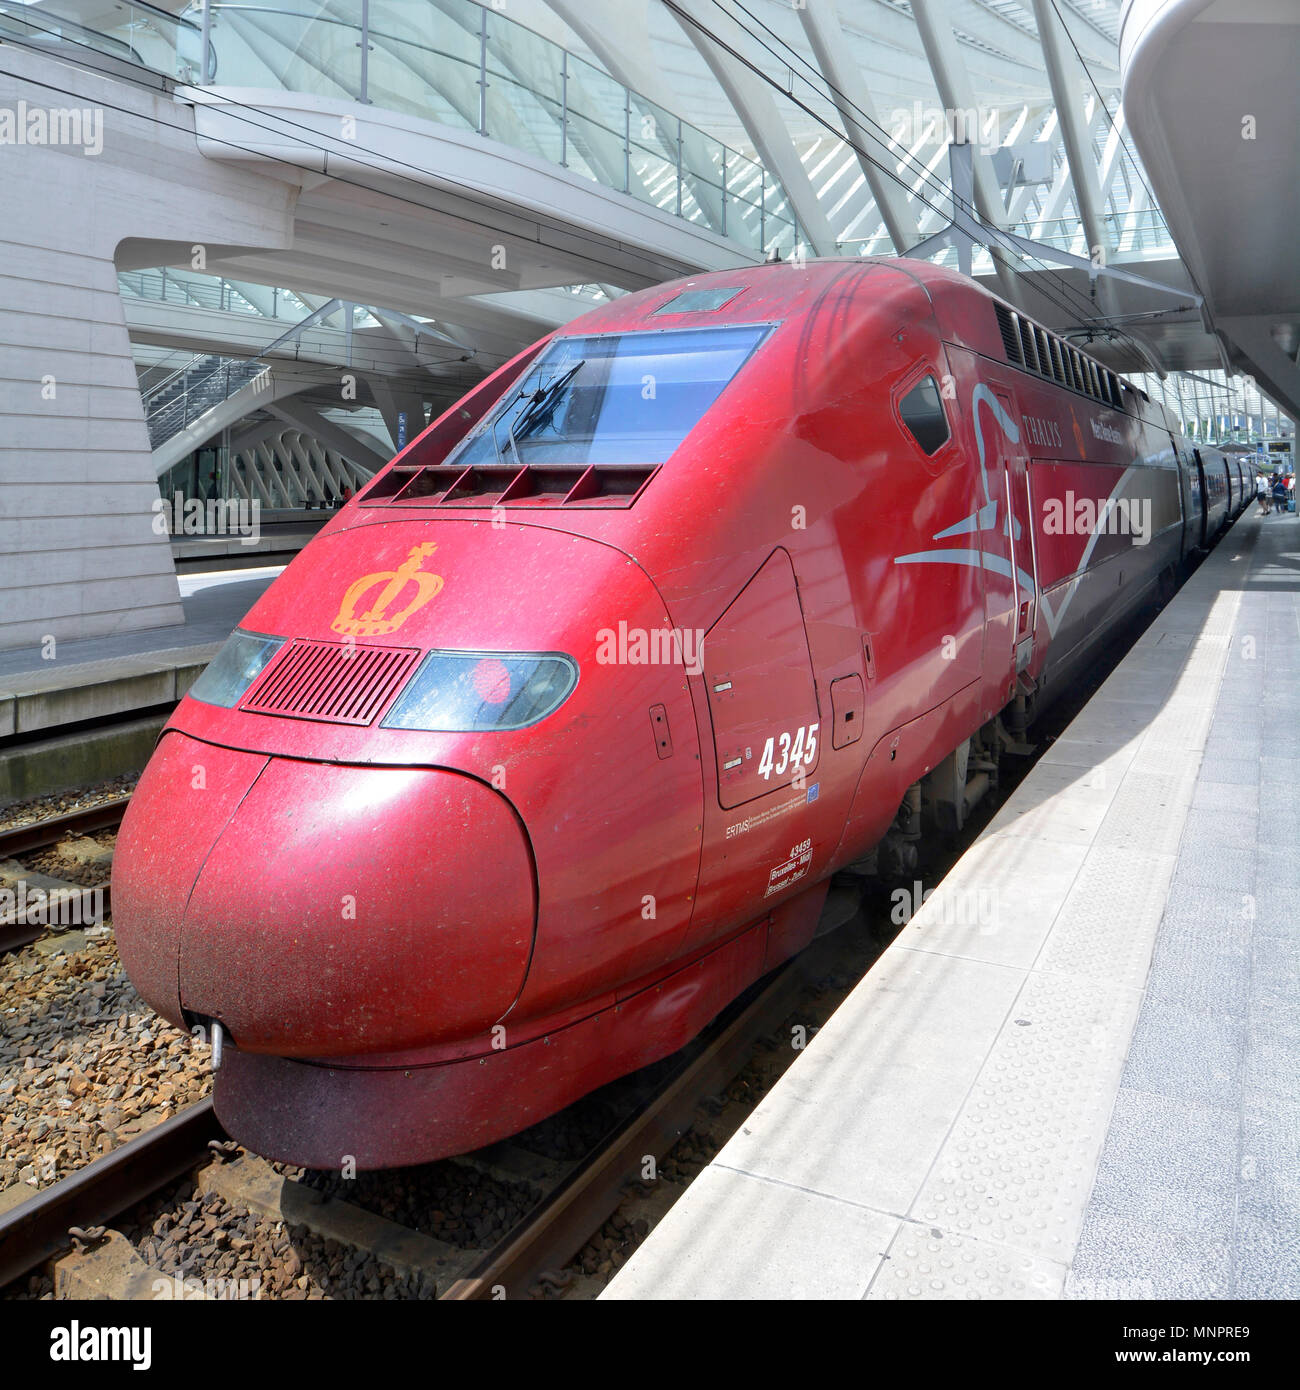 Aerodynamics on public transport SNCF TGV Thalys PBKA aerodynamic electric locomotive high speed passenger train at Liege Belgium EU railway station Stock Photo